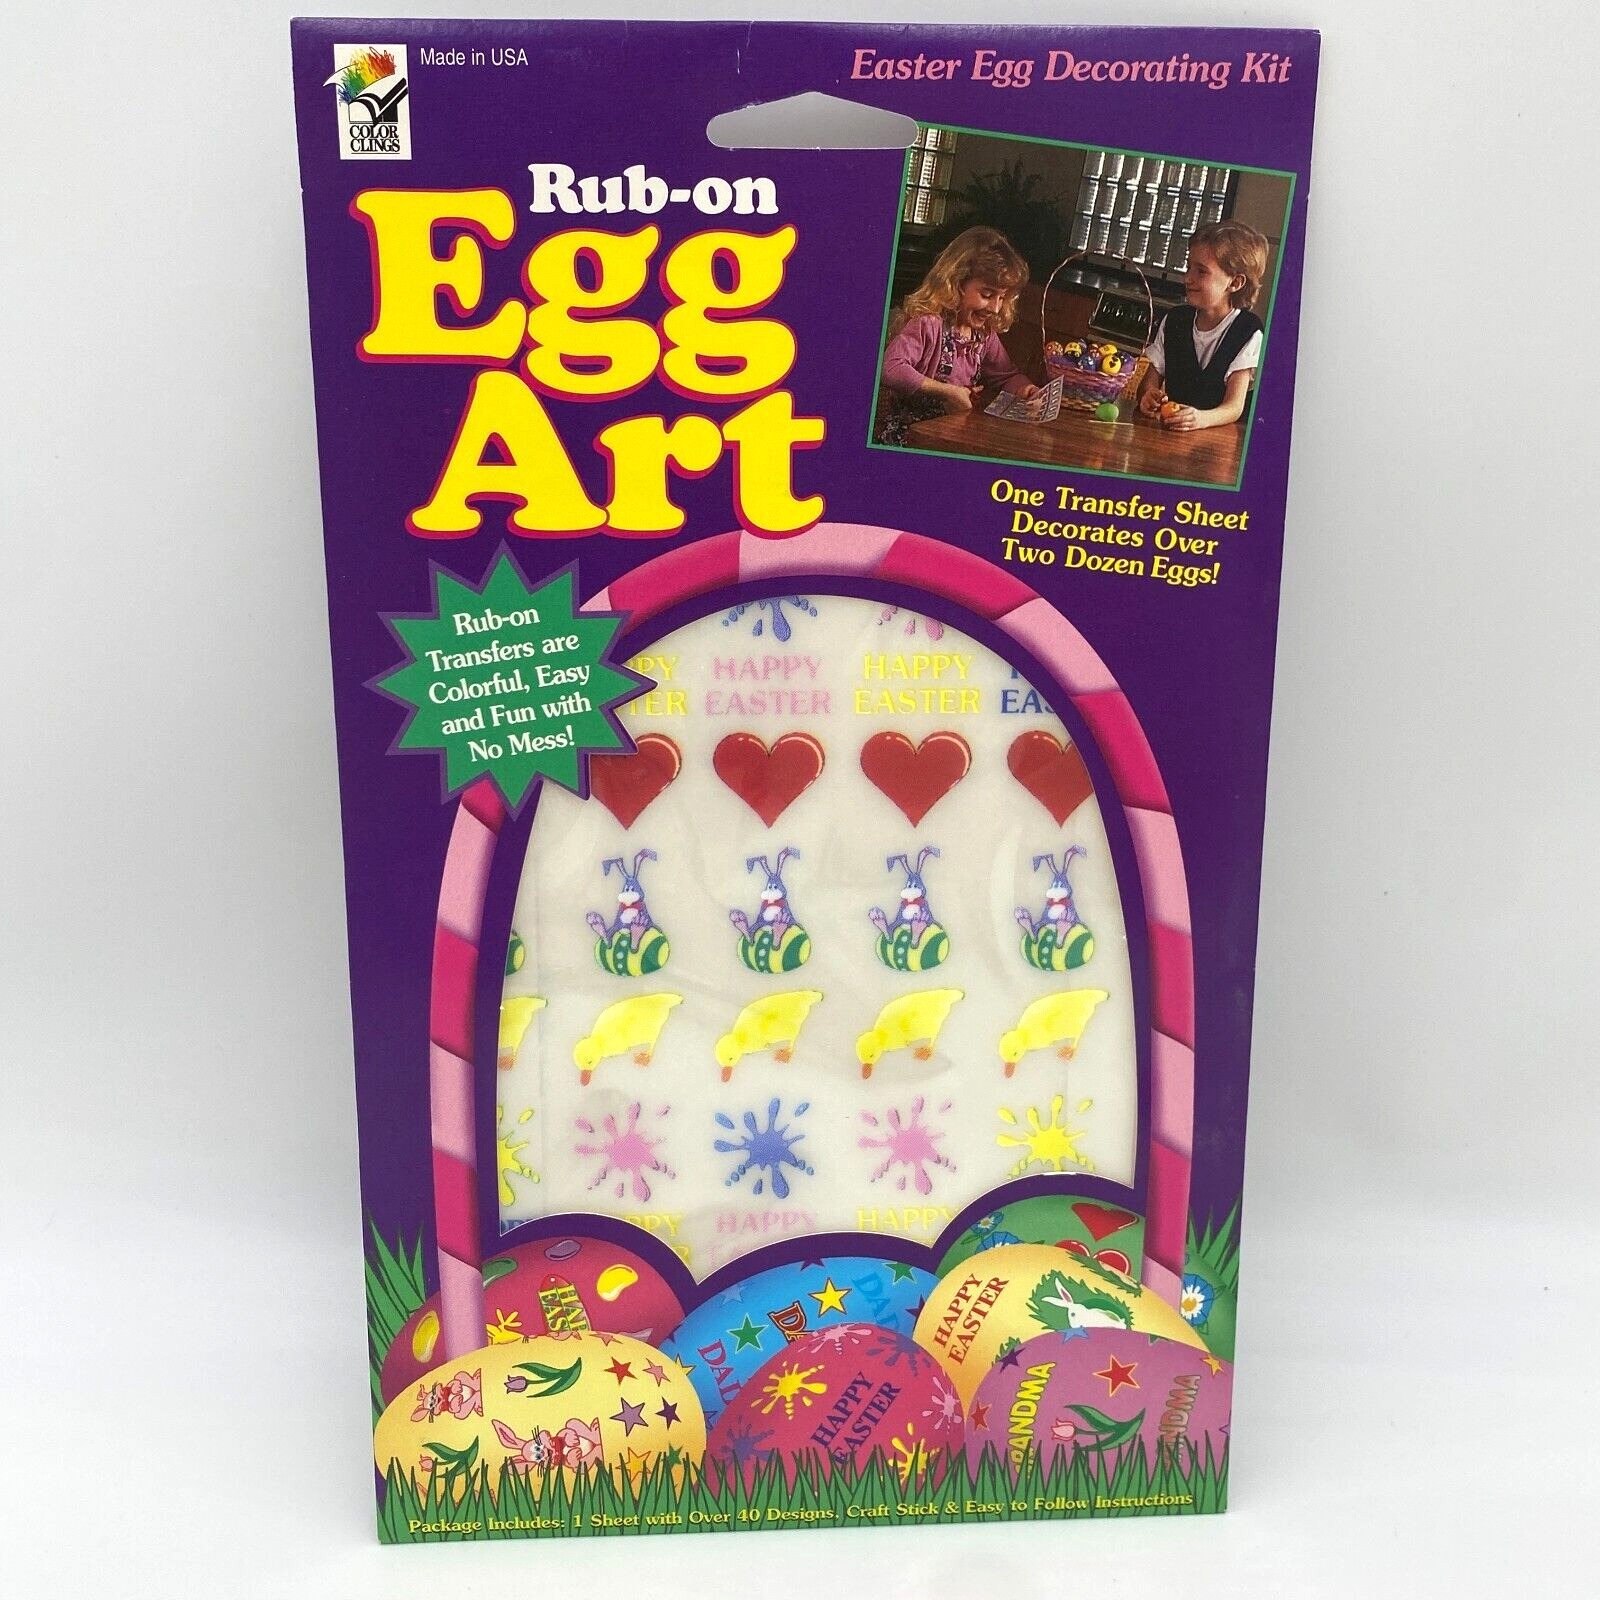 Vintage Color Clings Rub-on Egg Art Transfers Easter Egg Decorating Kit, 1995